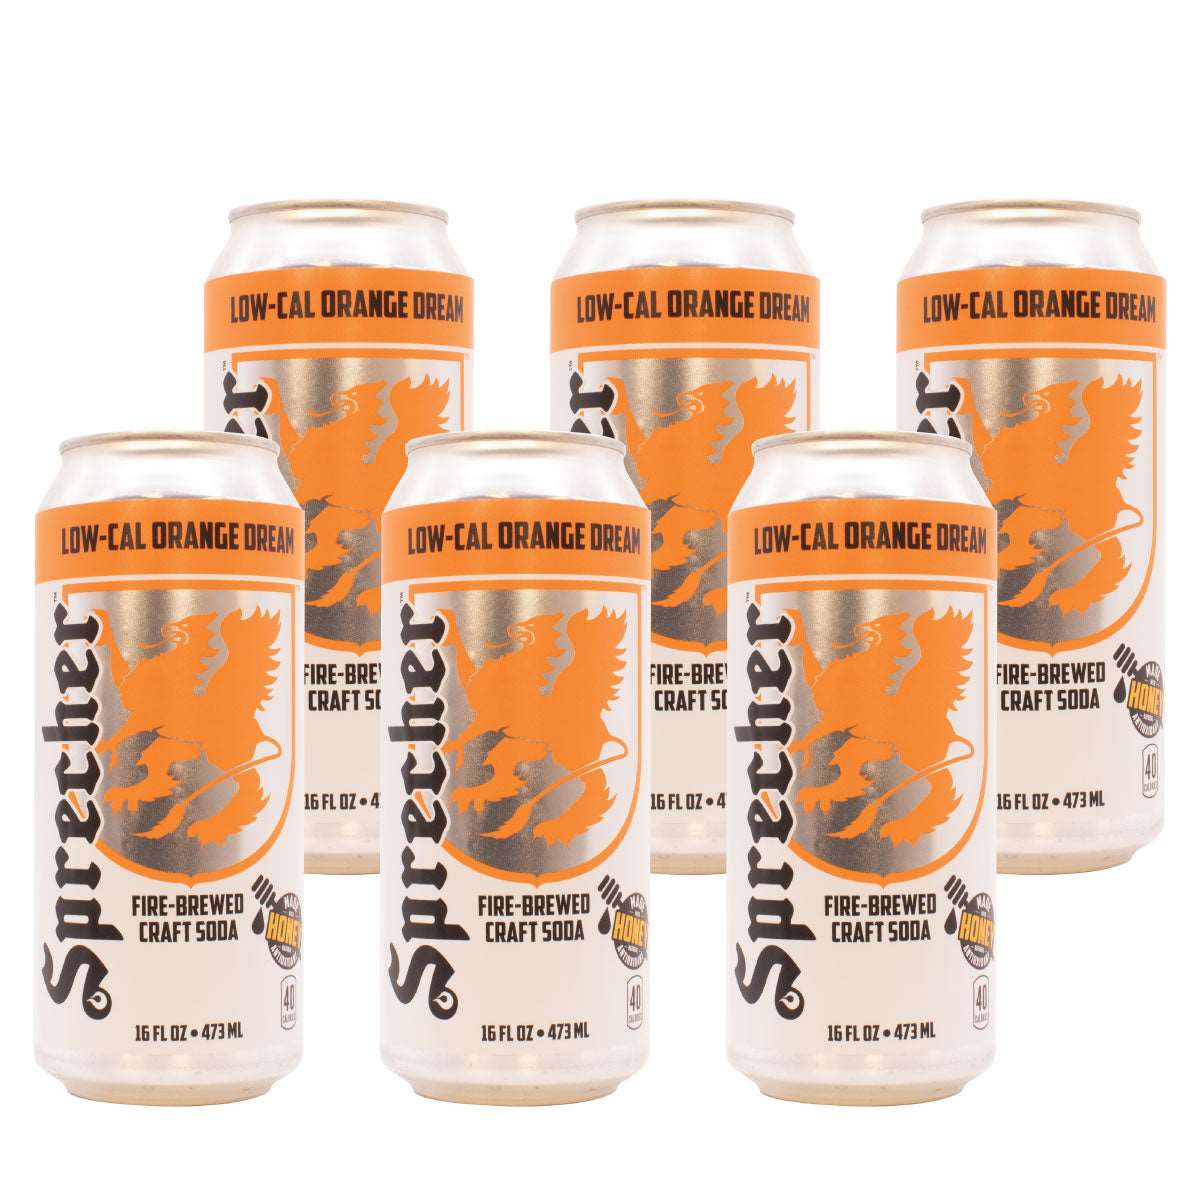 6 16oz cans of Sprecher fire-brewed low-cal orange dream soda